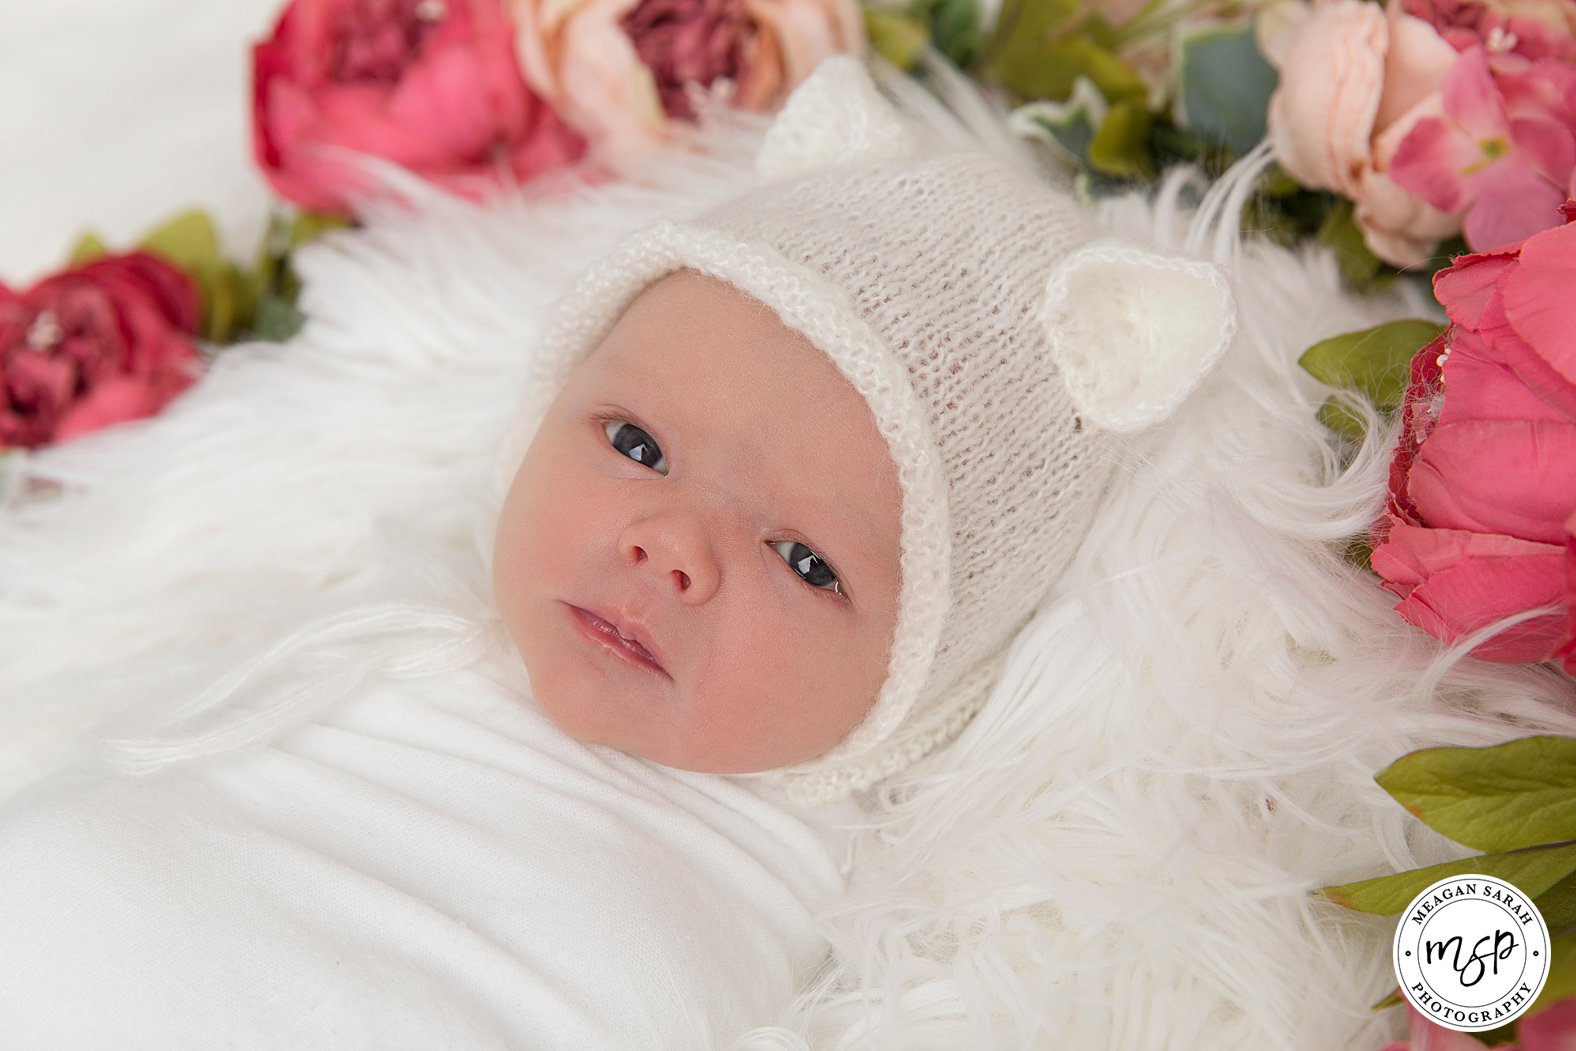 Baby Photos,Cute,Meagan Sarah Photography,Modern,Newborn Photography,Newborn Photos,Newborn studio,Newborns.,Studio,Yorkshire photographer,